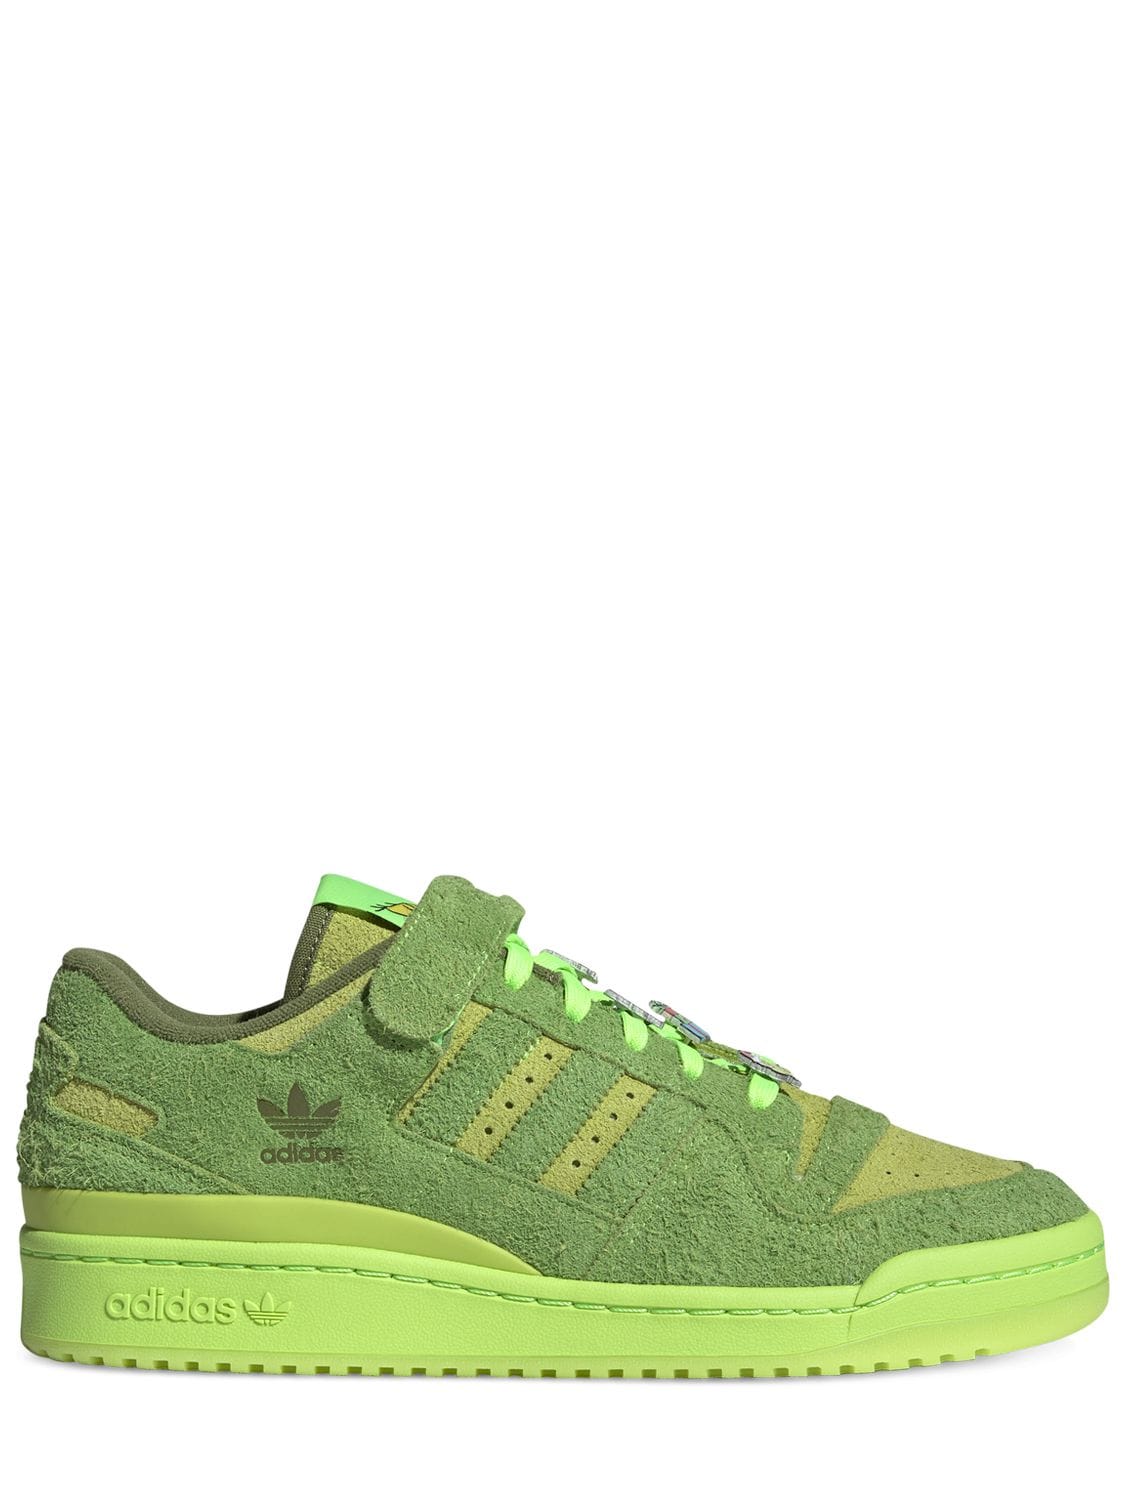 Adidas Originals The Grinch Forum Low Sneakers In Green